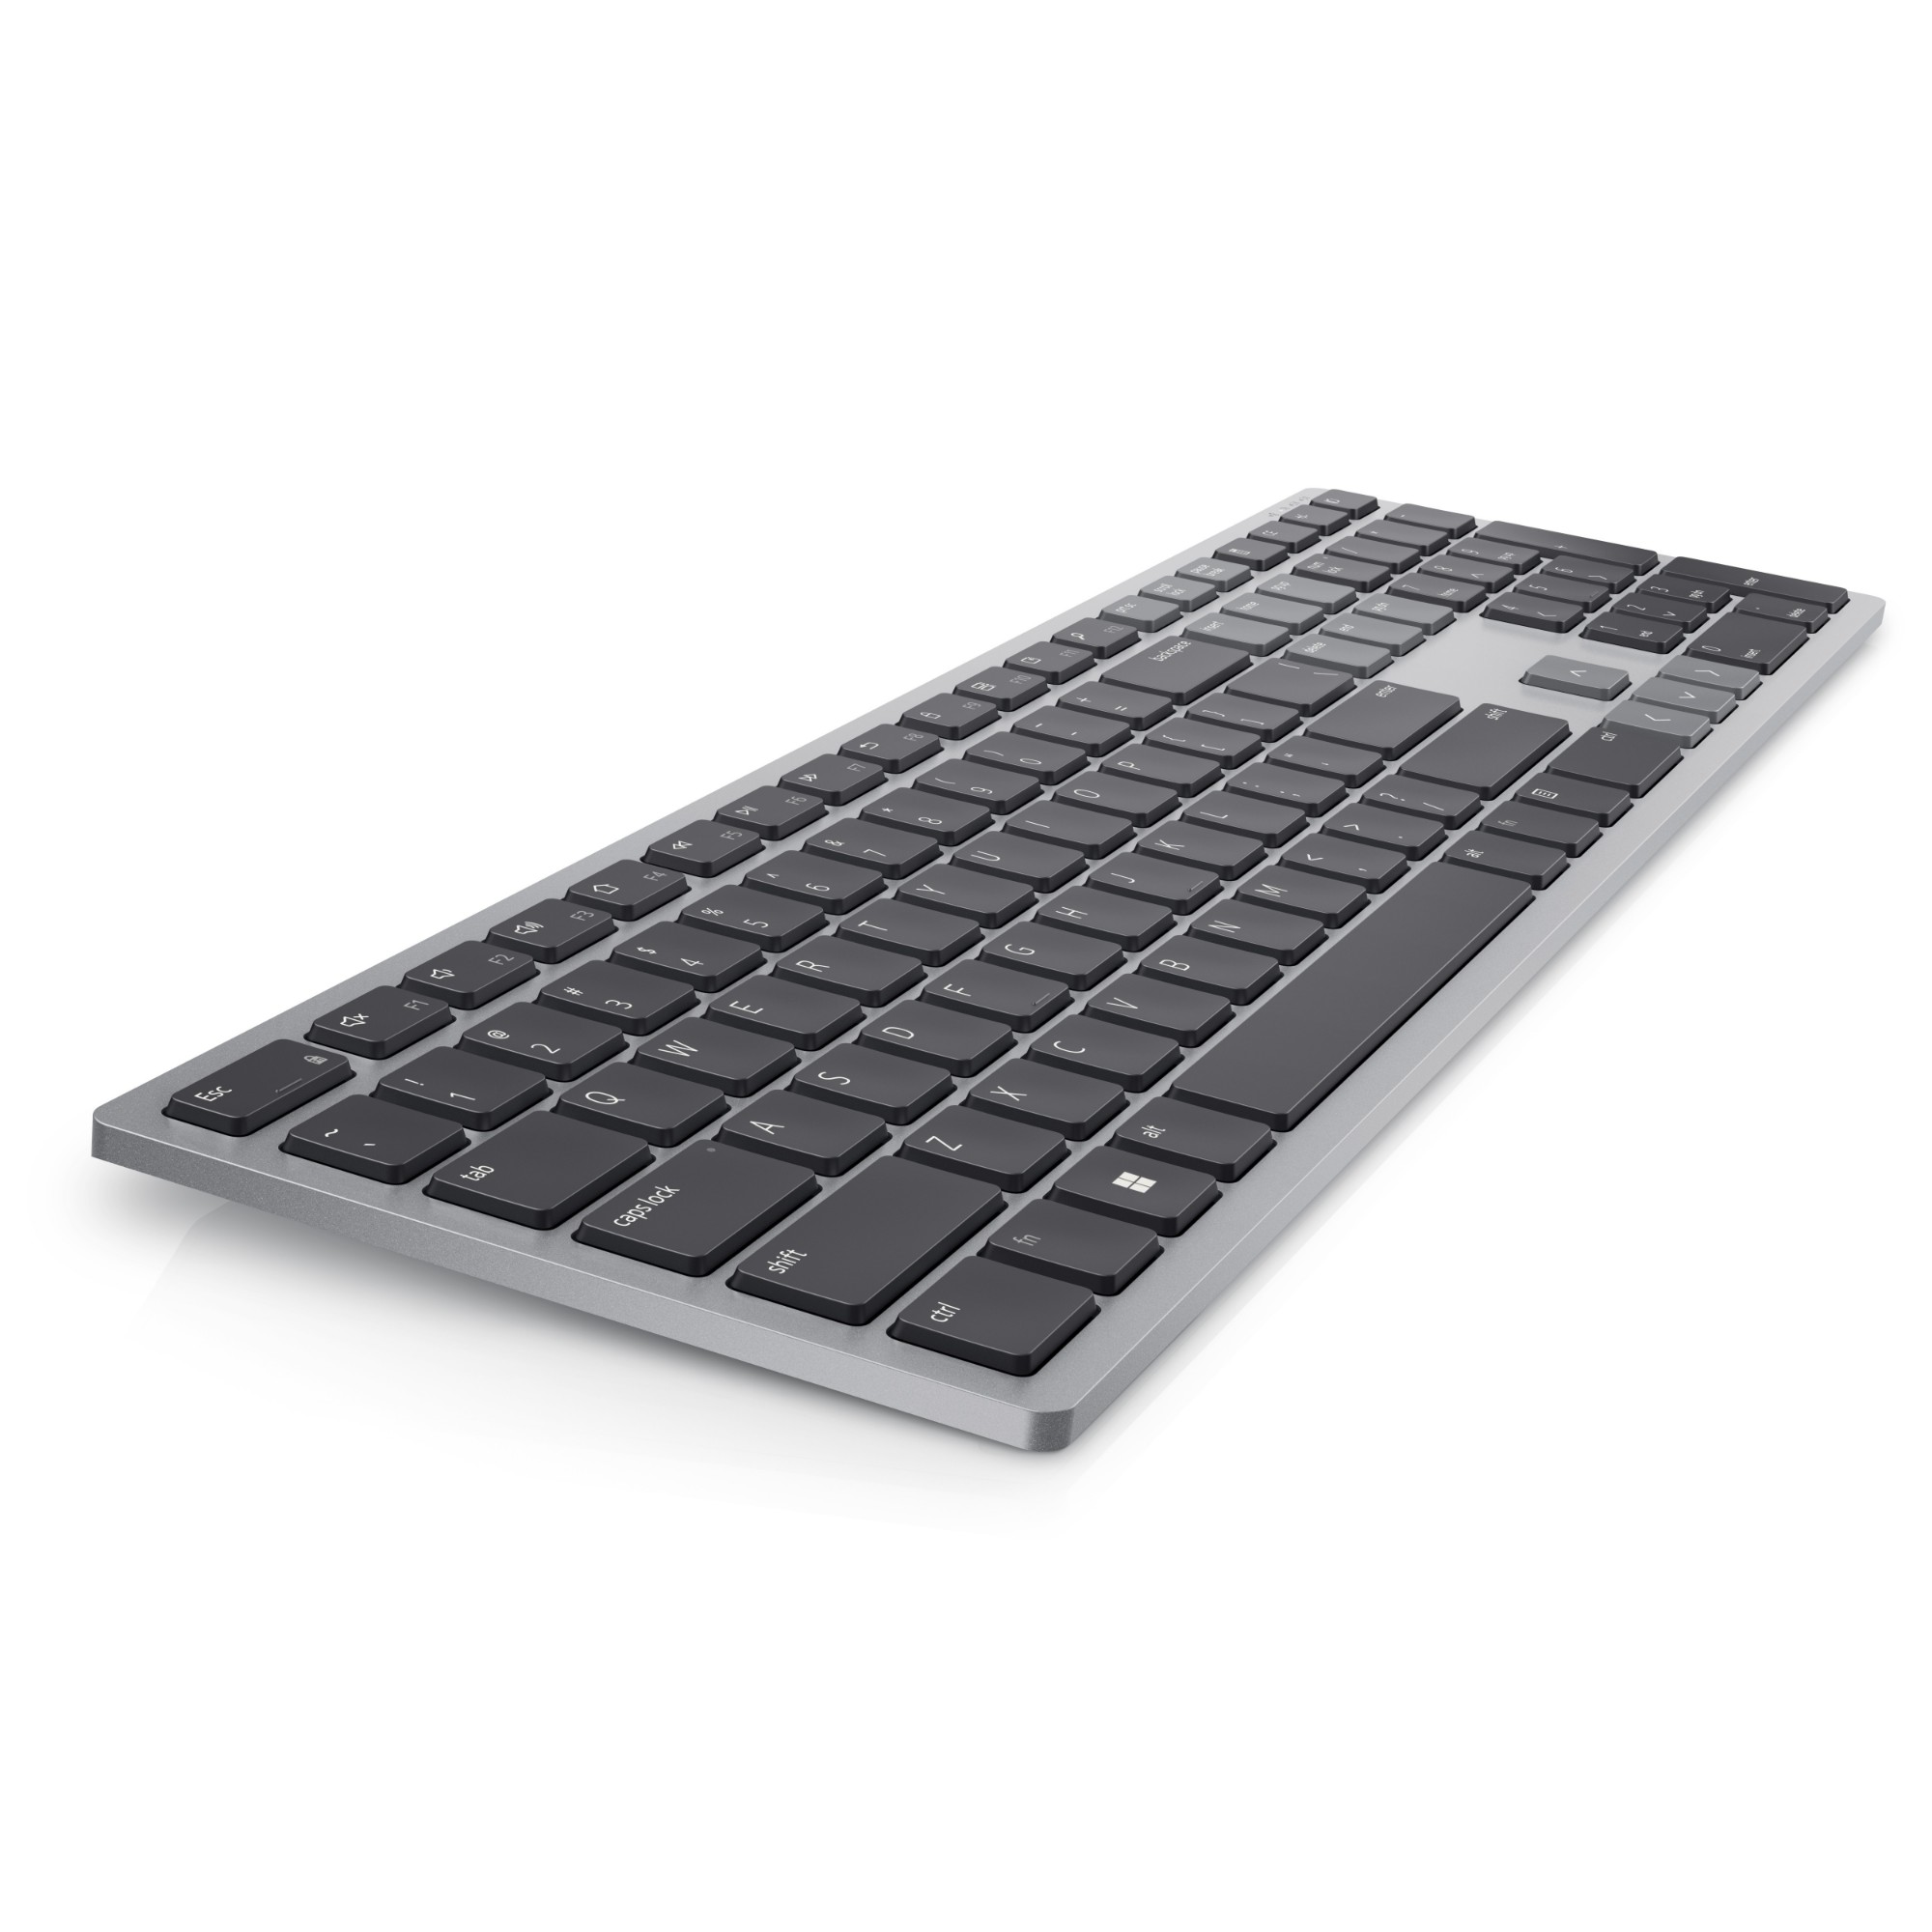 KB700-GY-R-INT DELL Multi-Device KB700 - Tastatur - kabellos